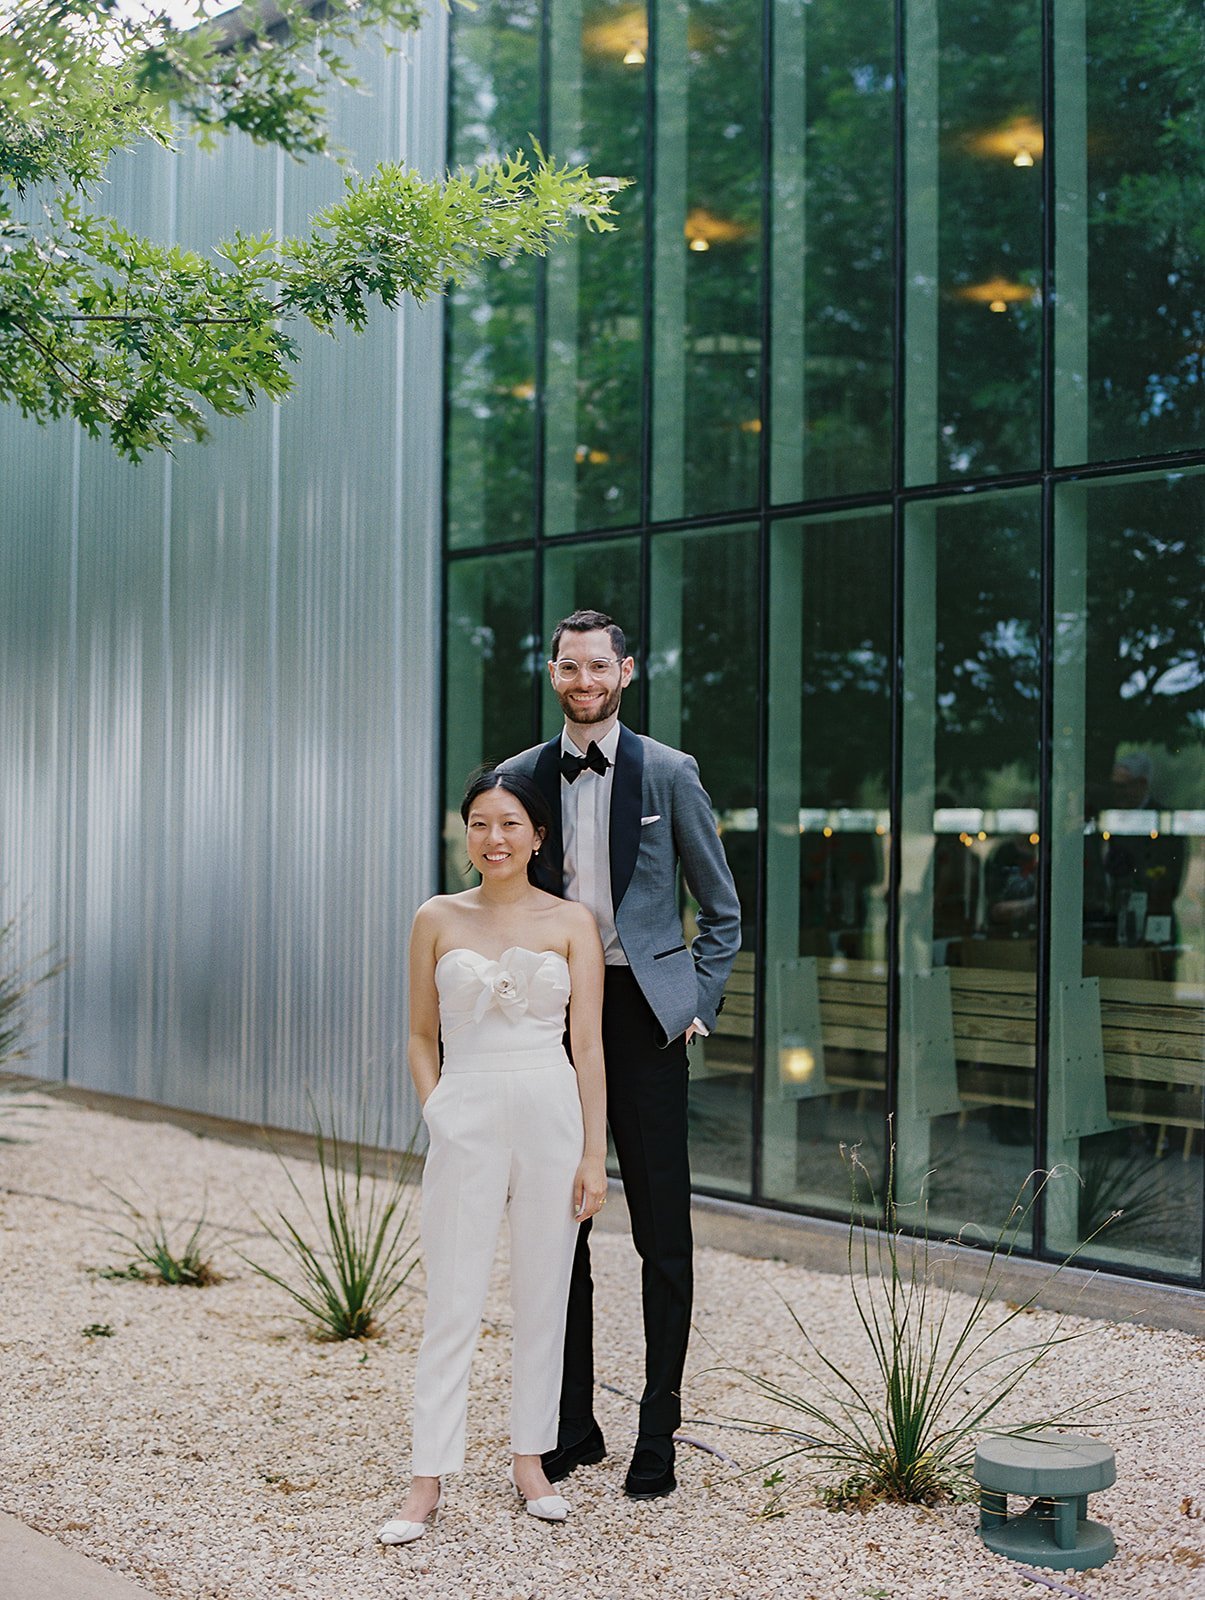 Best-Austin-Candid-Wedding-Photographers-Film-Documentary-35mm-Prospect-House-86.jpg